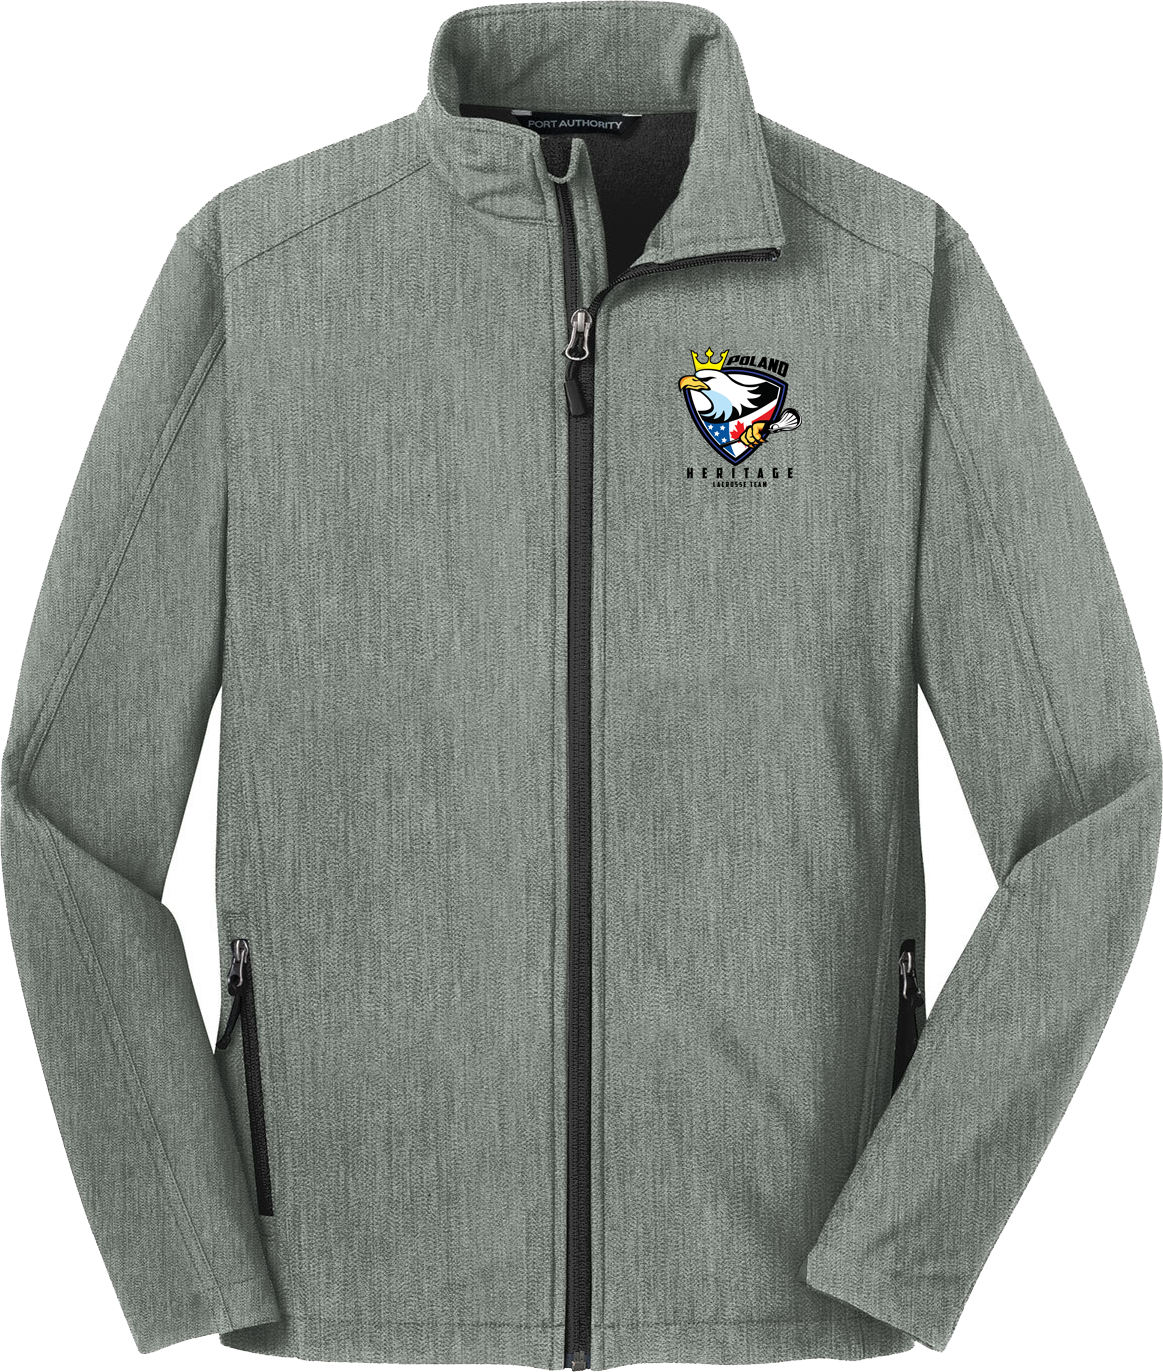 Poland Heritage Team Light Grey Soft Shell Jacket